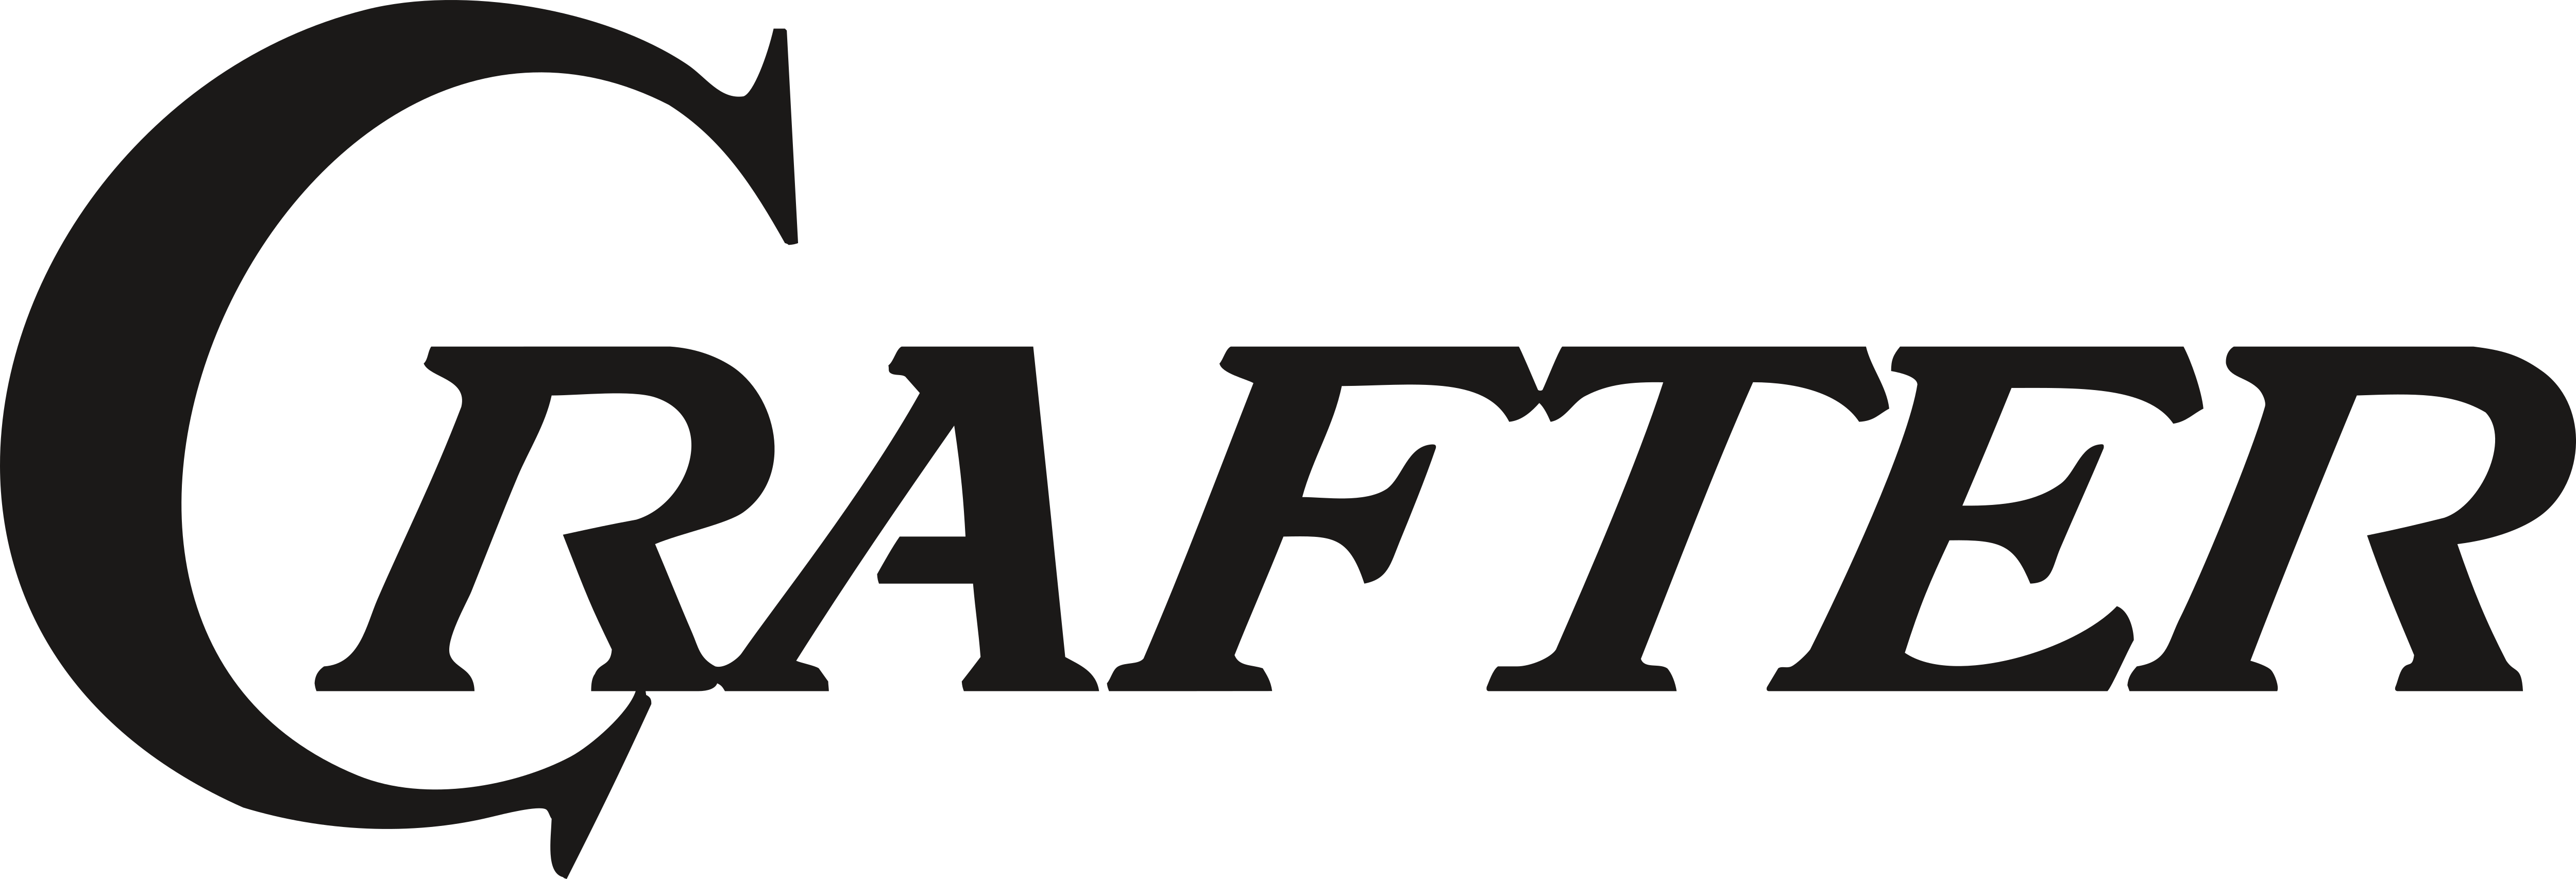 Crafter Guitars Logo